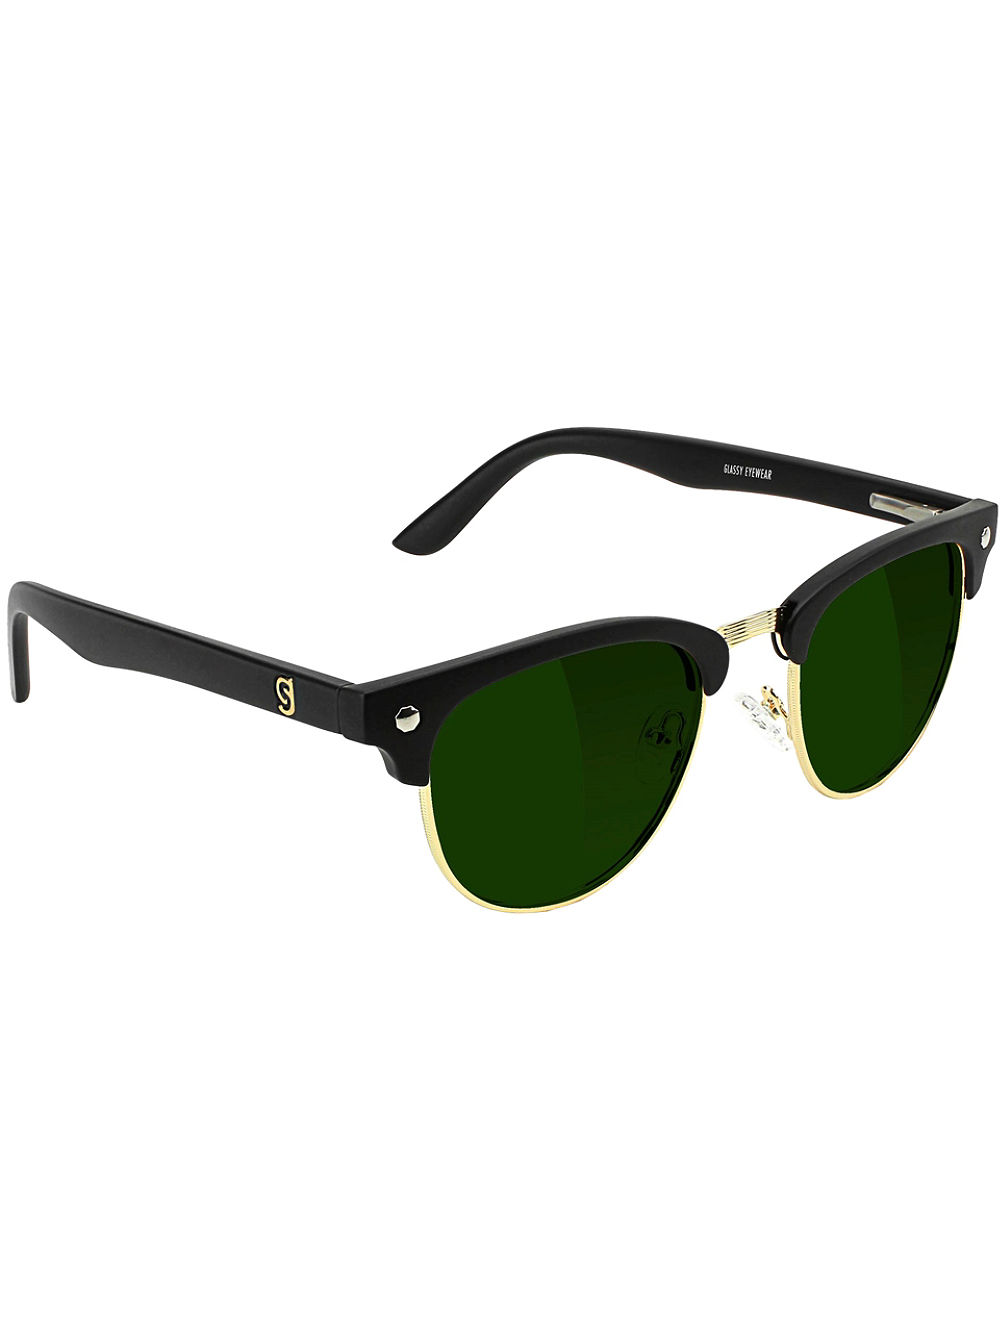 Morrison Premium Polarized Black/Green L Sun